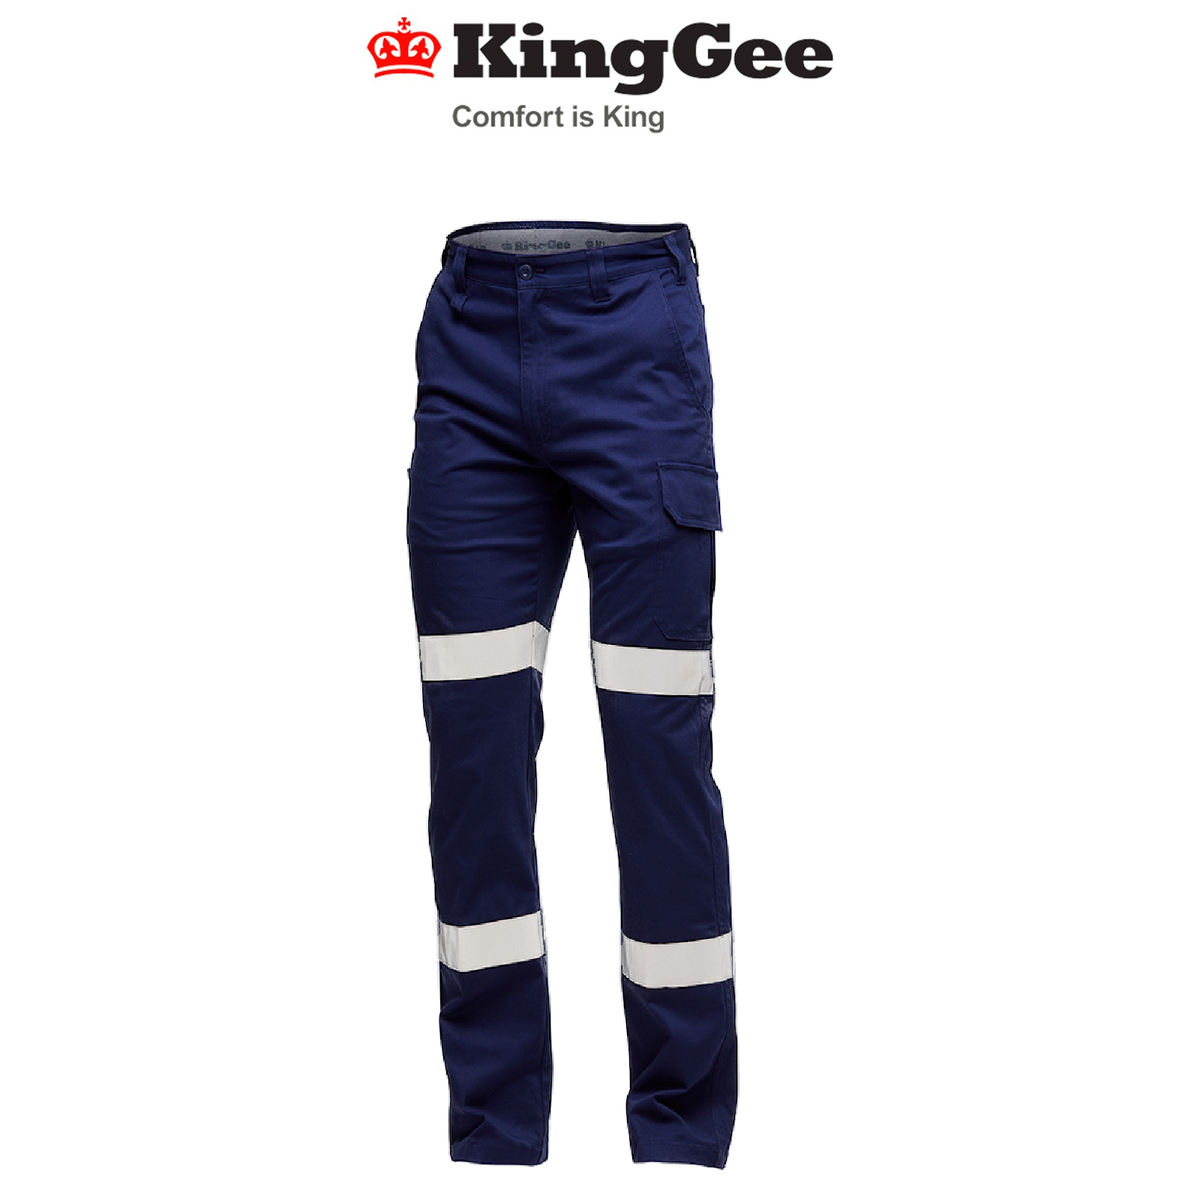 KingGee Mens Stretch Bio Motion Cargo Pants Cotton Work Safety Reflective K53018